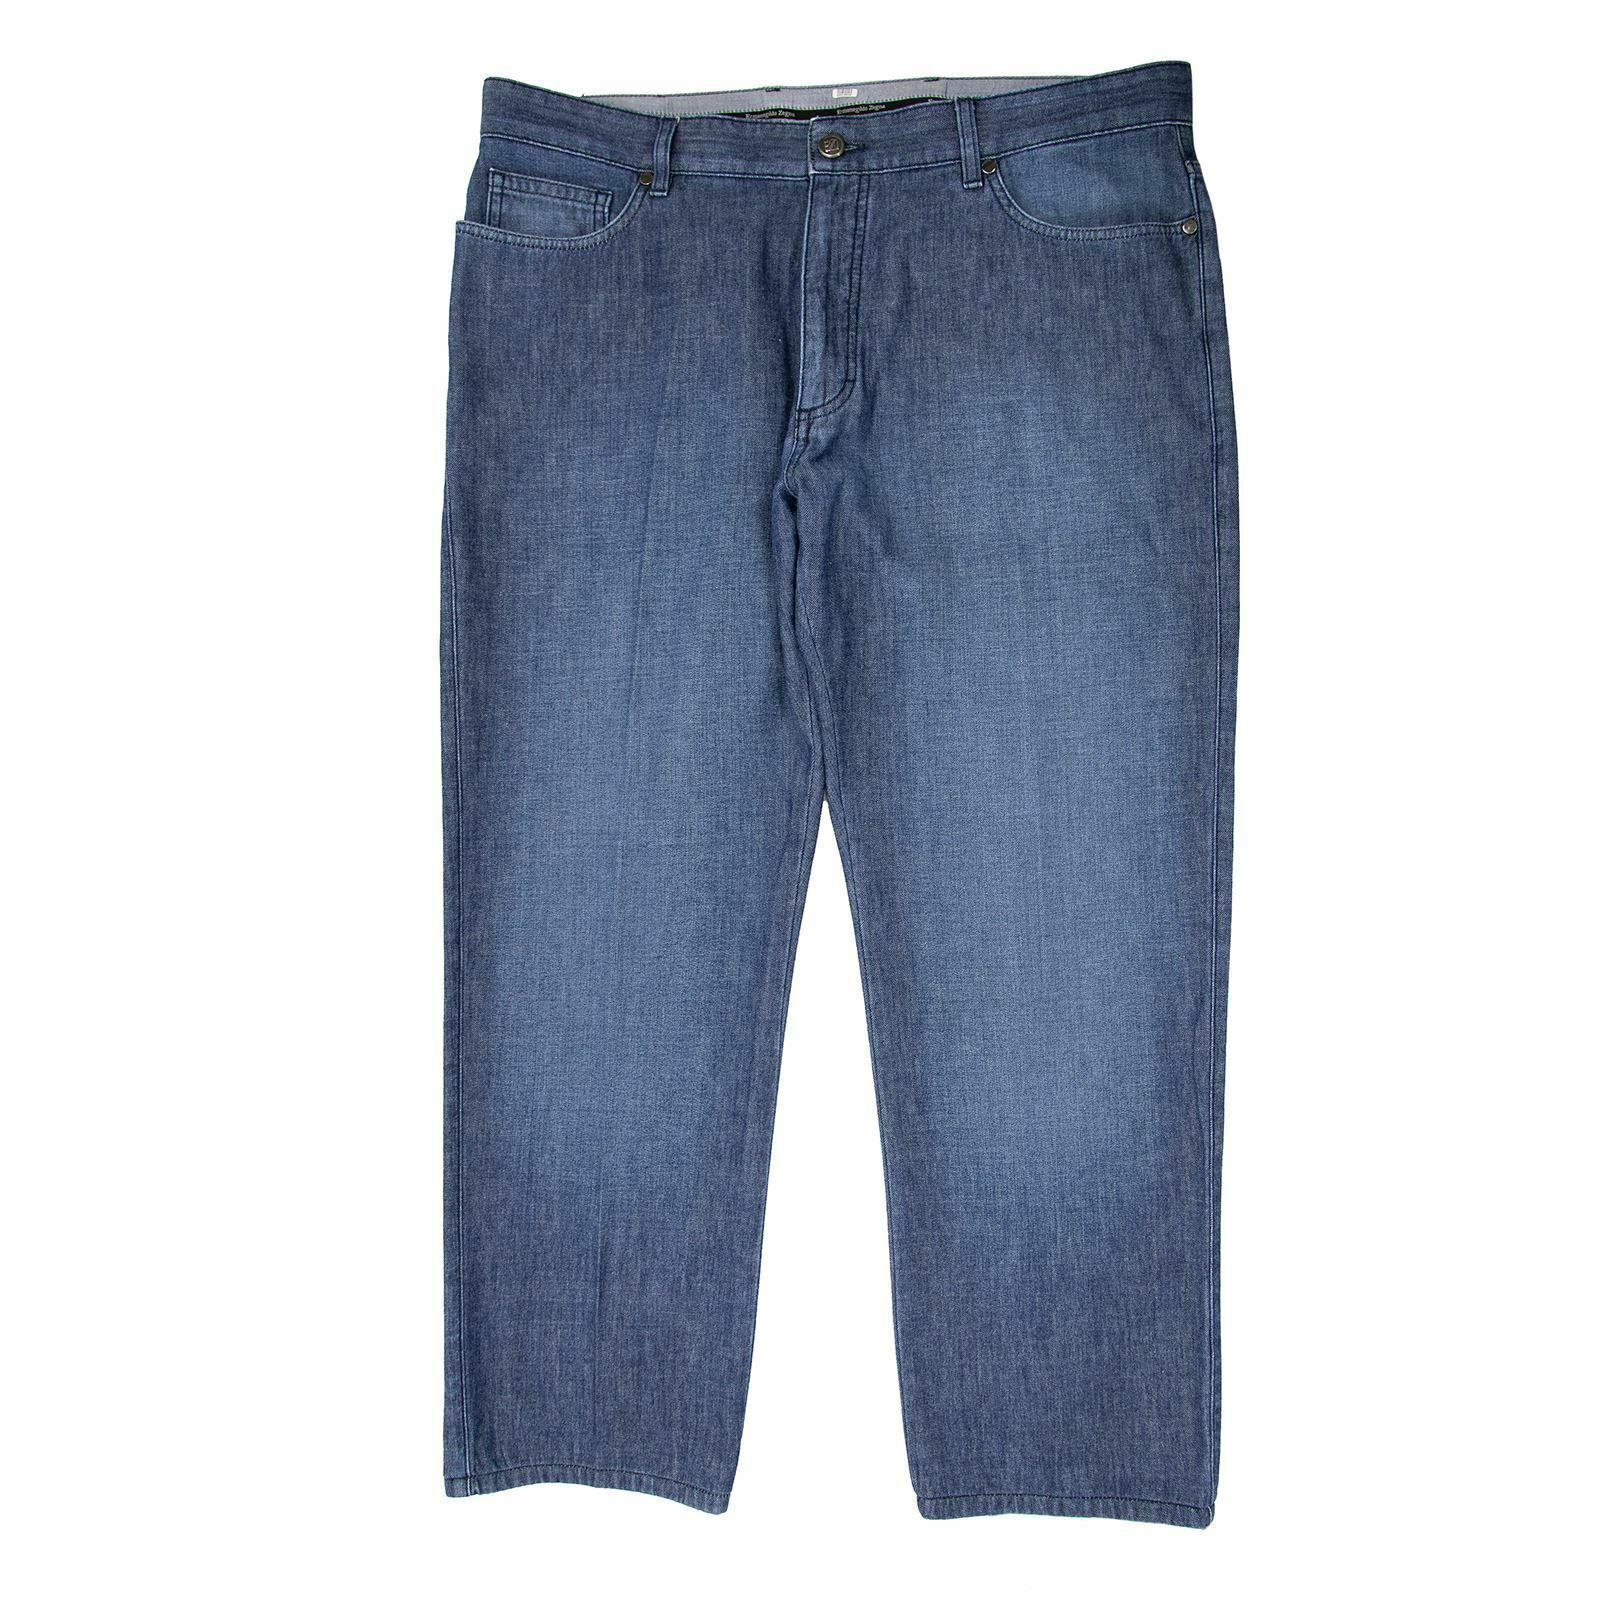 Zegna Japanese Denim Blue 5-Pocket Leather Jacron Straight Jeans 38W | eBay